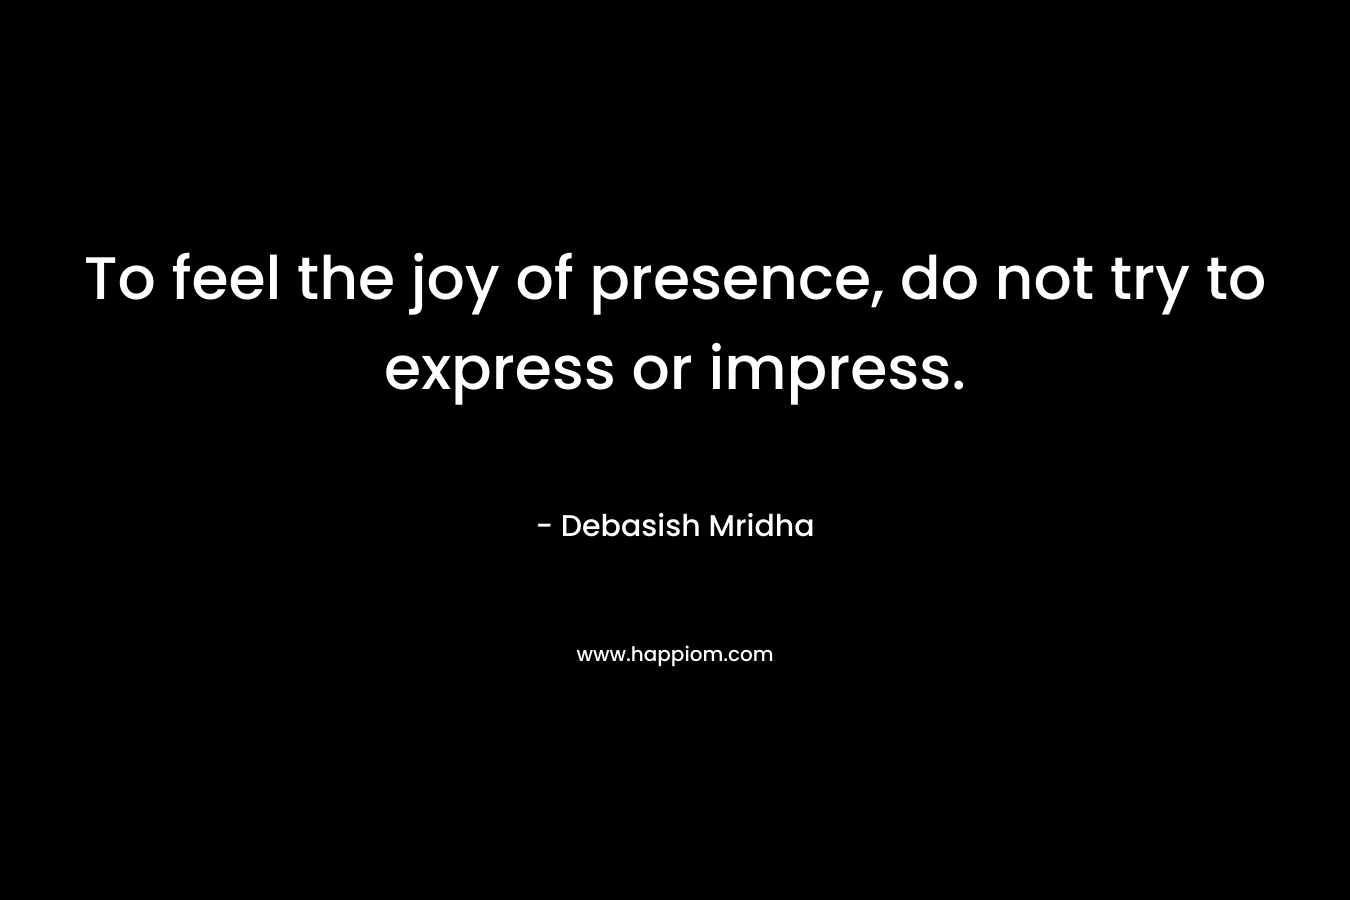 To feel the joy of presence, do not try to express or impress. – Debasish Mridha